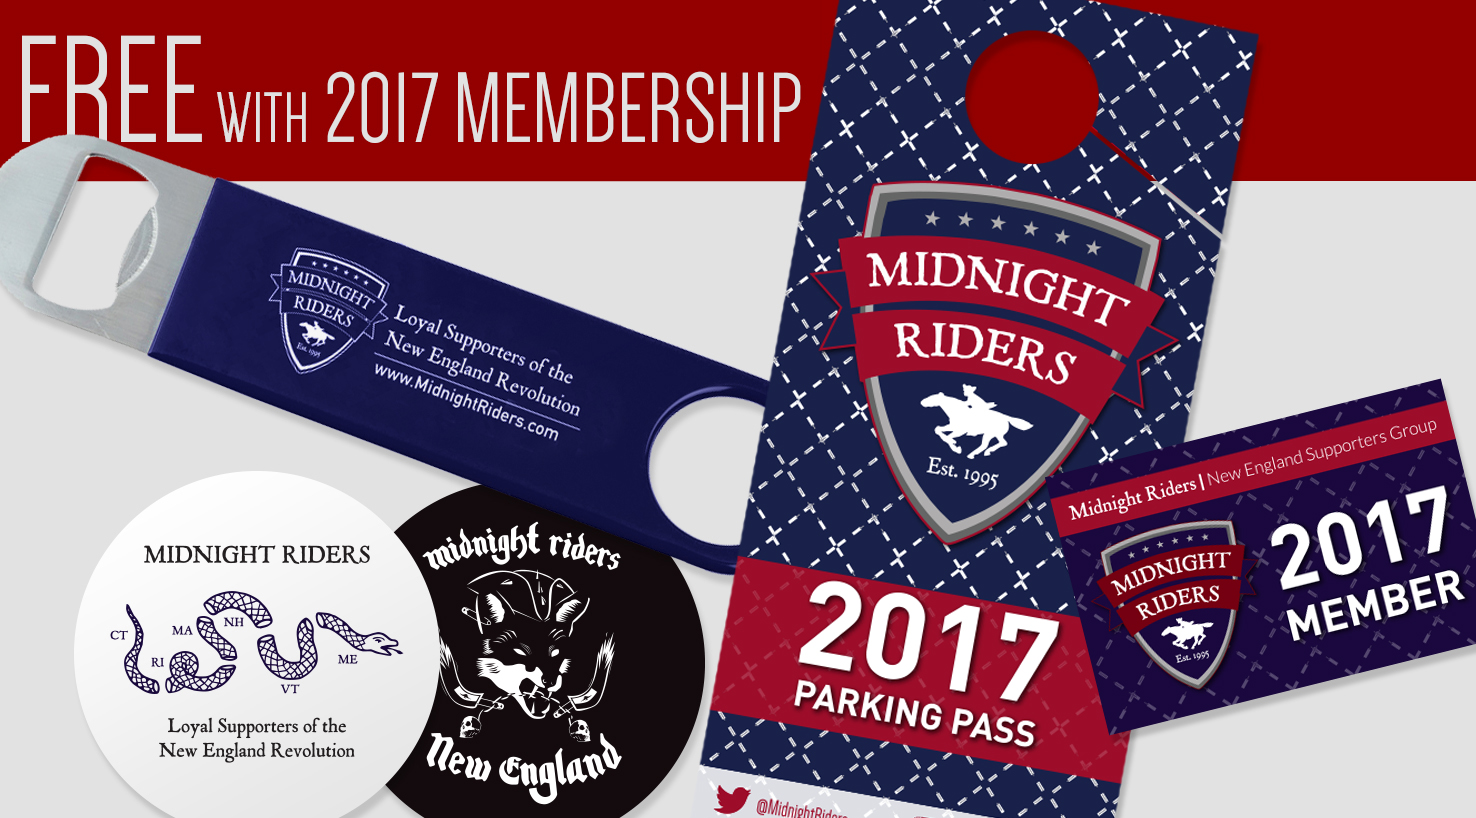 Free with 2017 Midnight Riders Membership